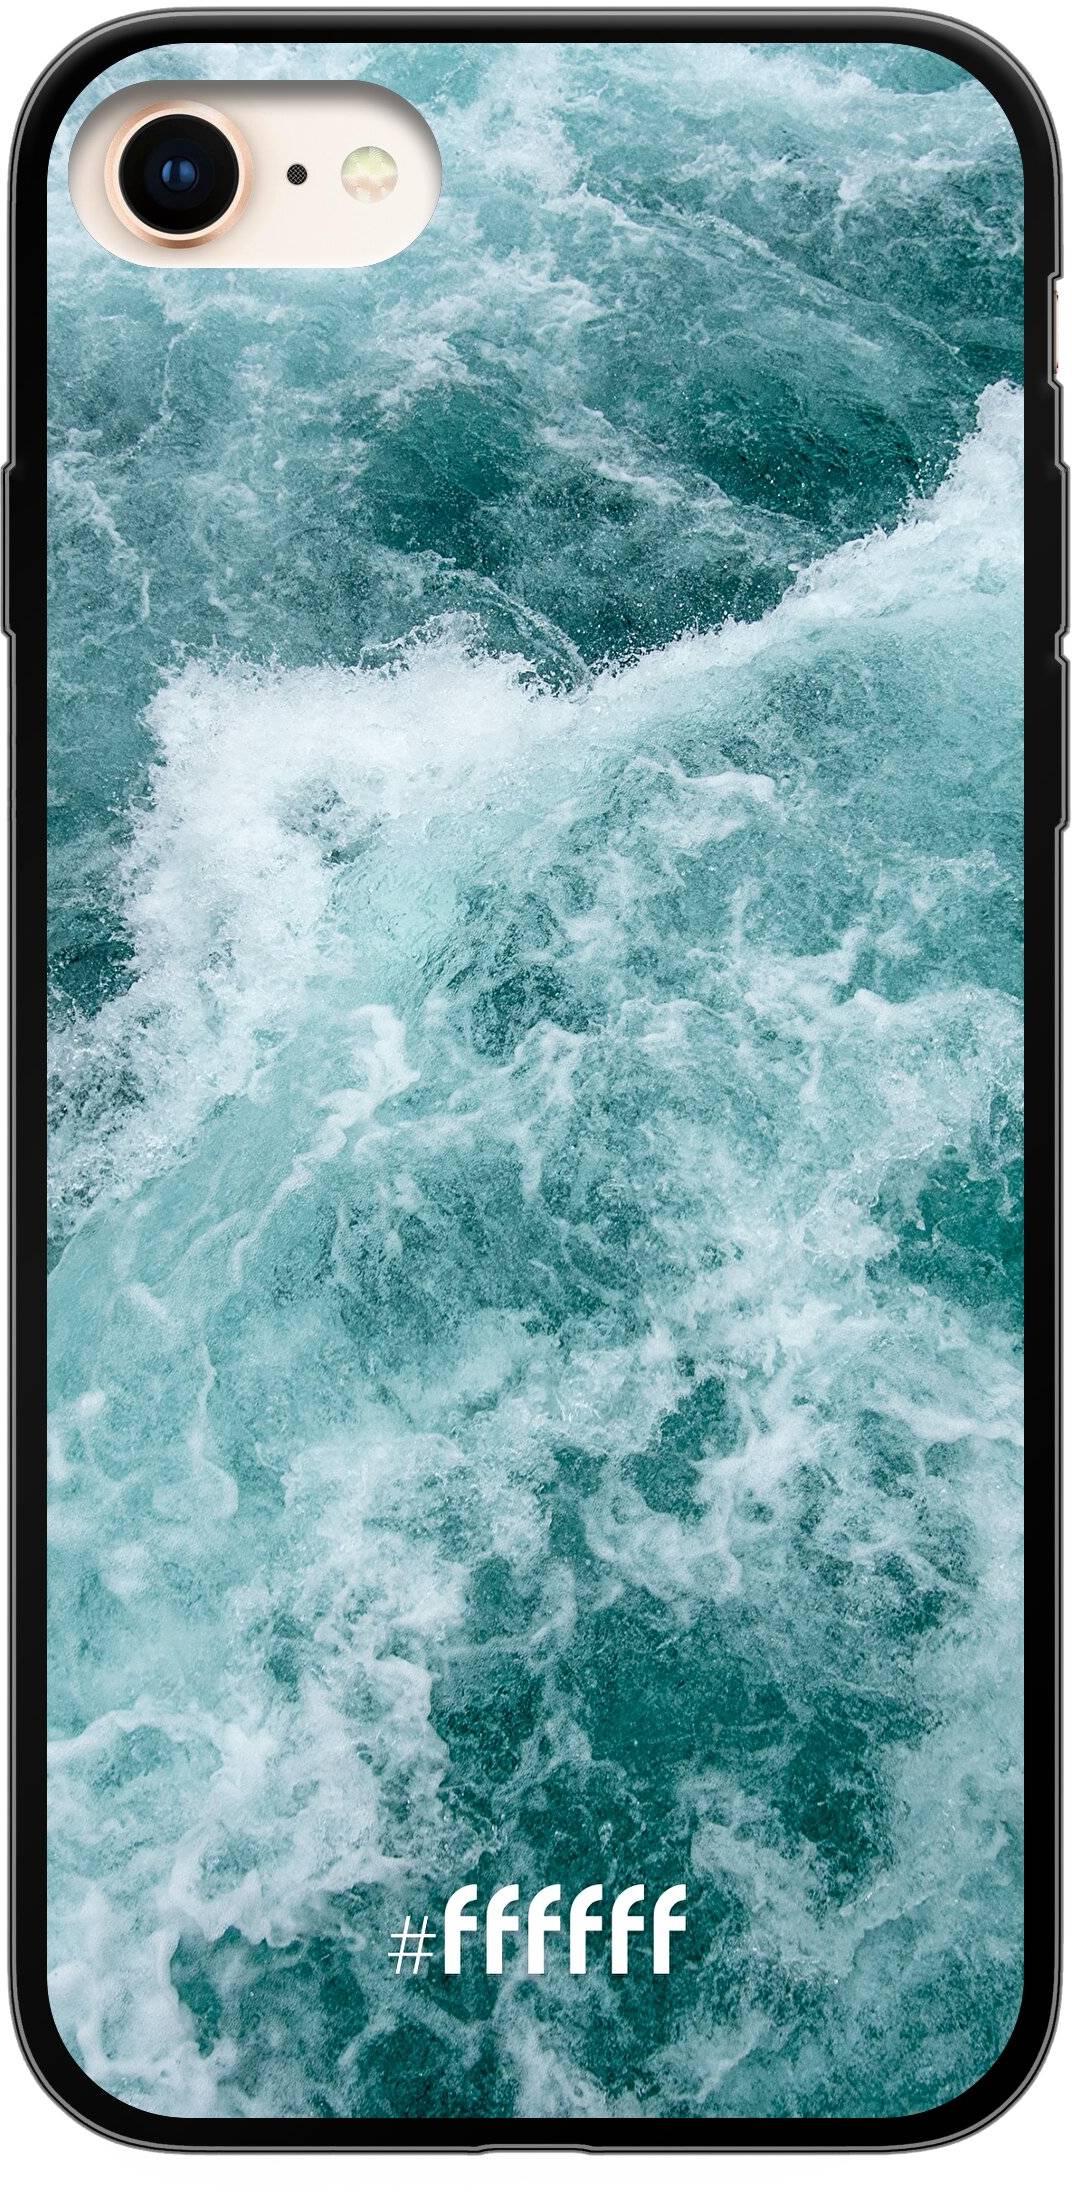 Whitecap Waves iPhone 7